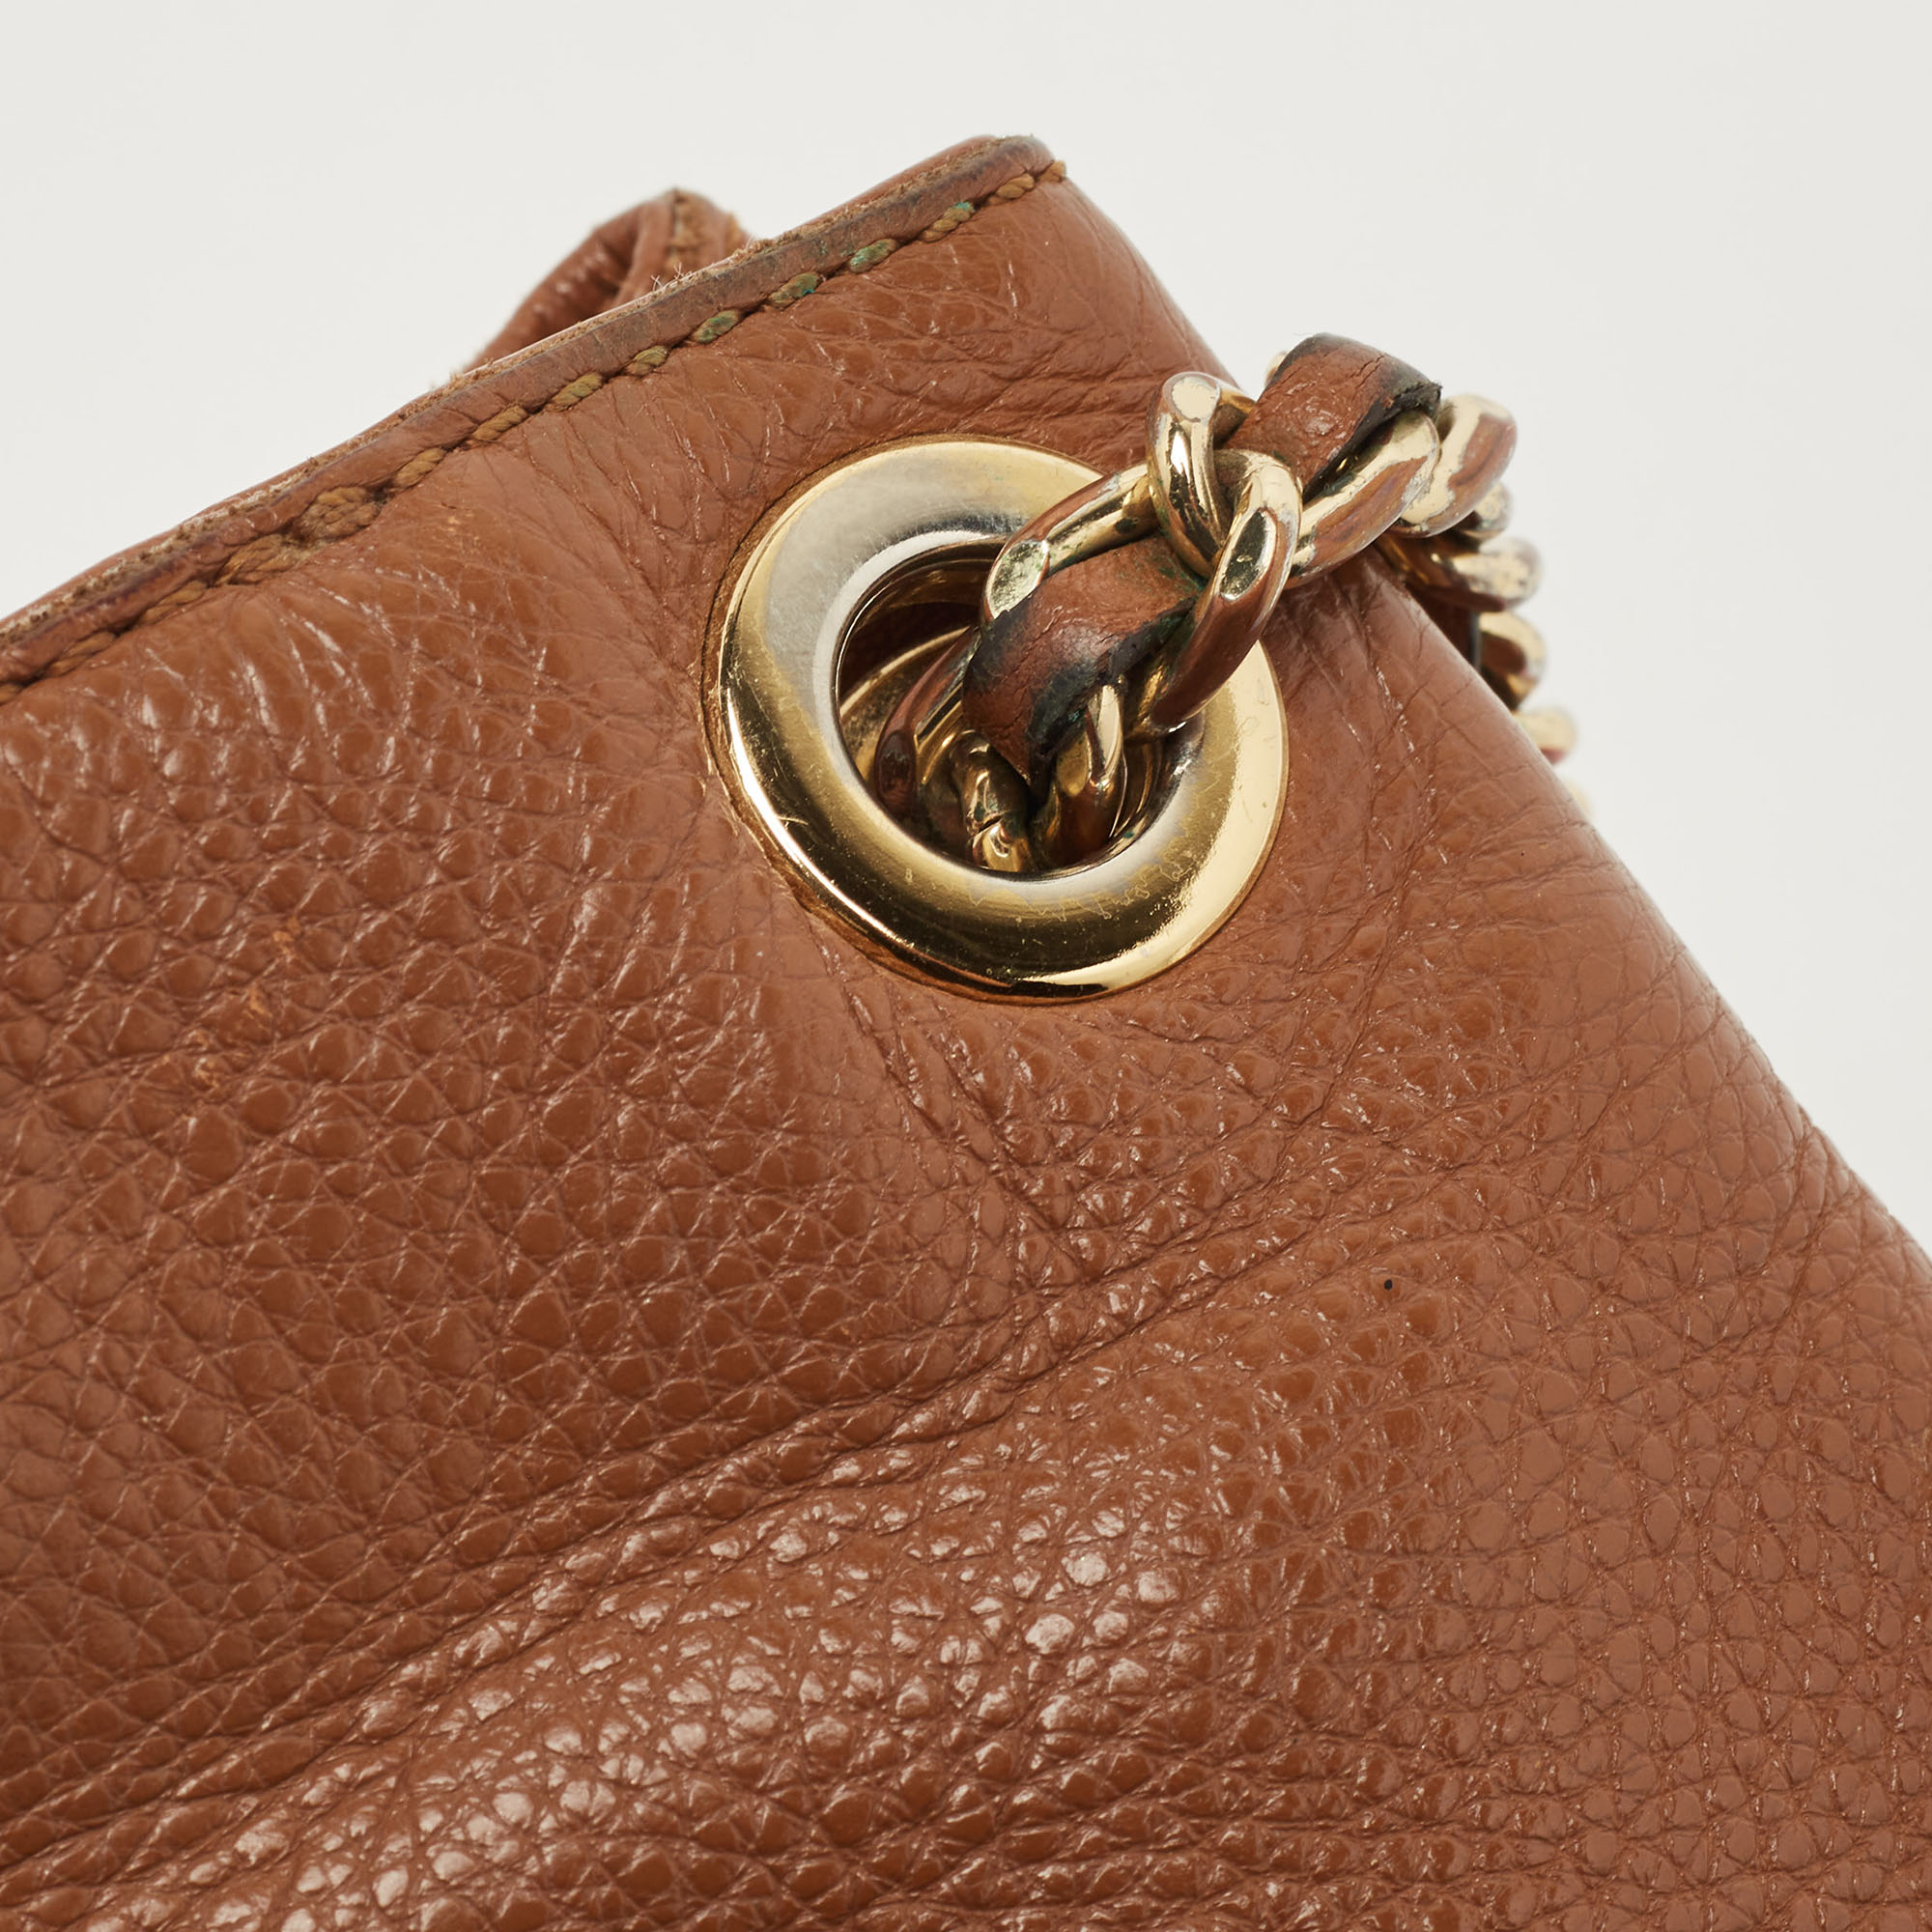 MICHAEL Michael Kors Brown Leather Chain Shoulder Bag